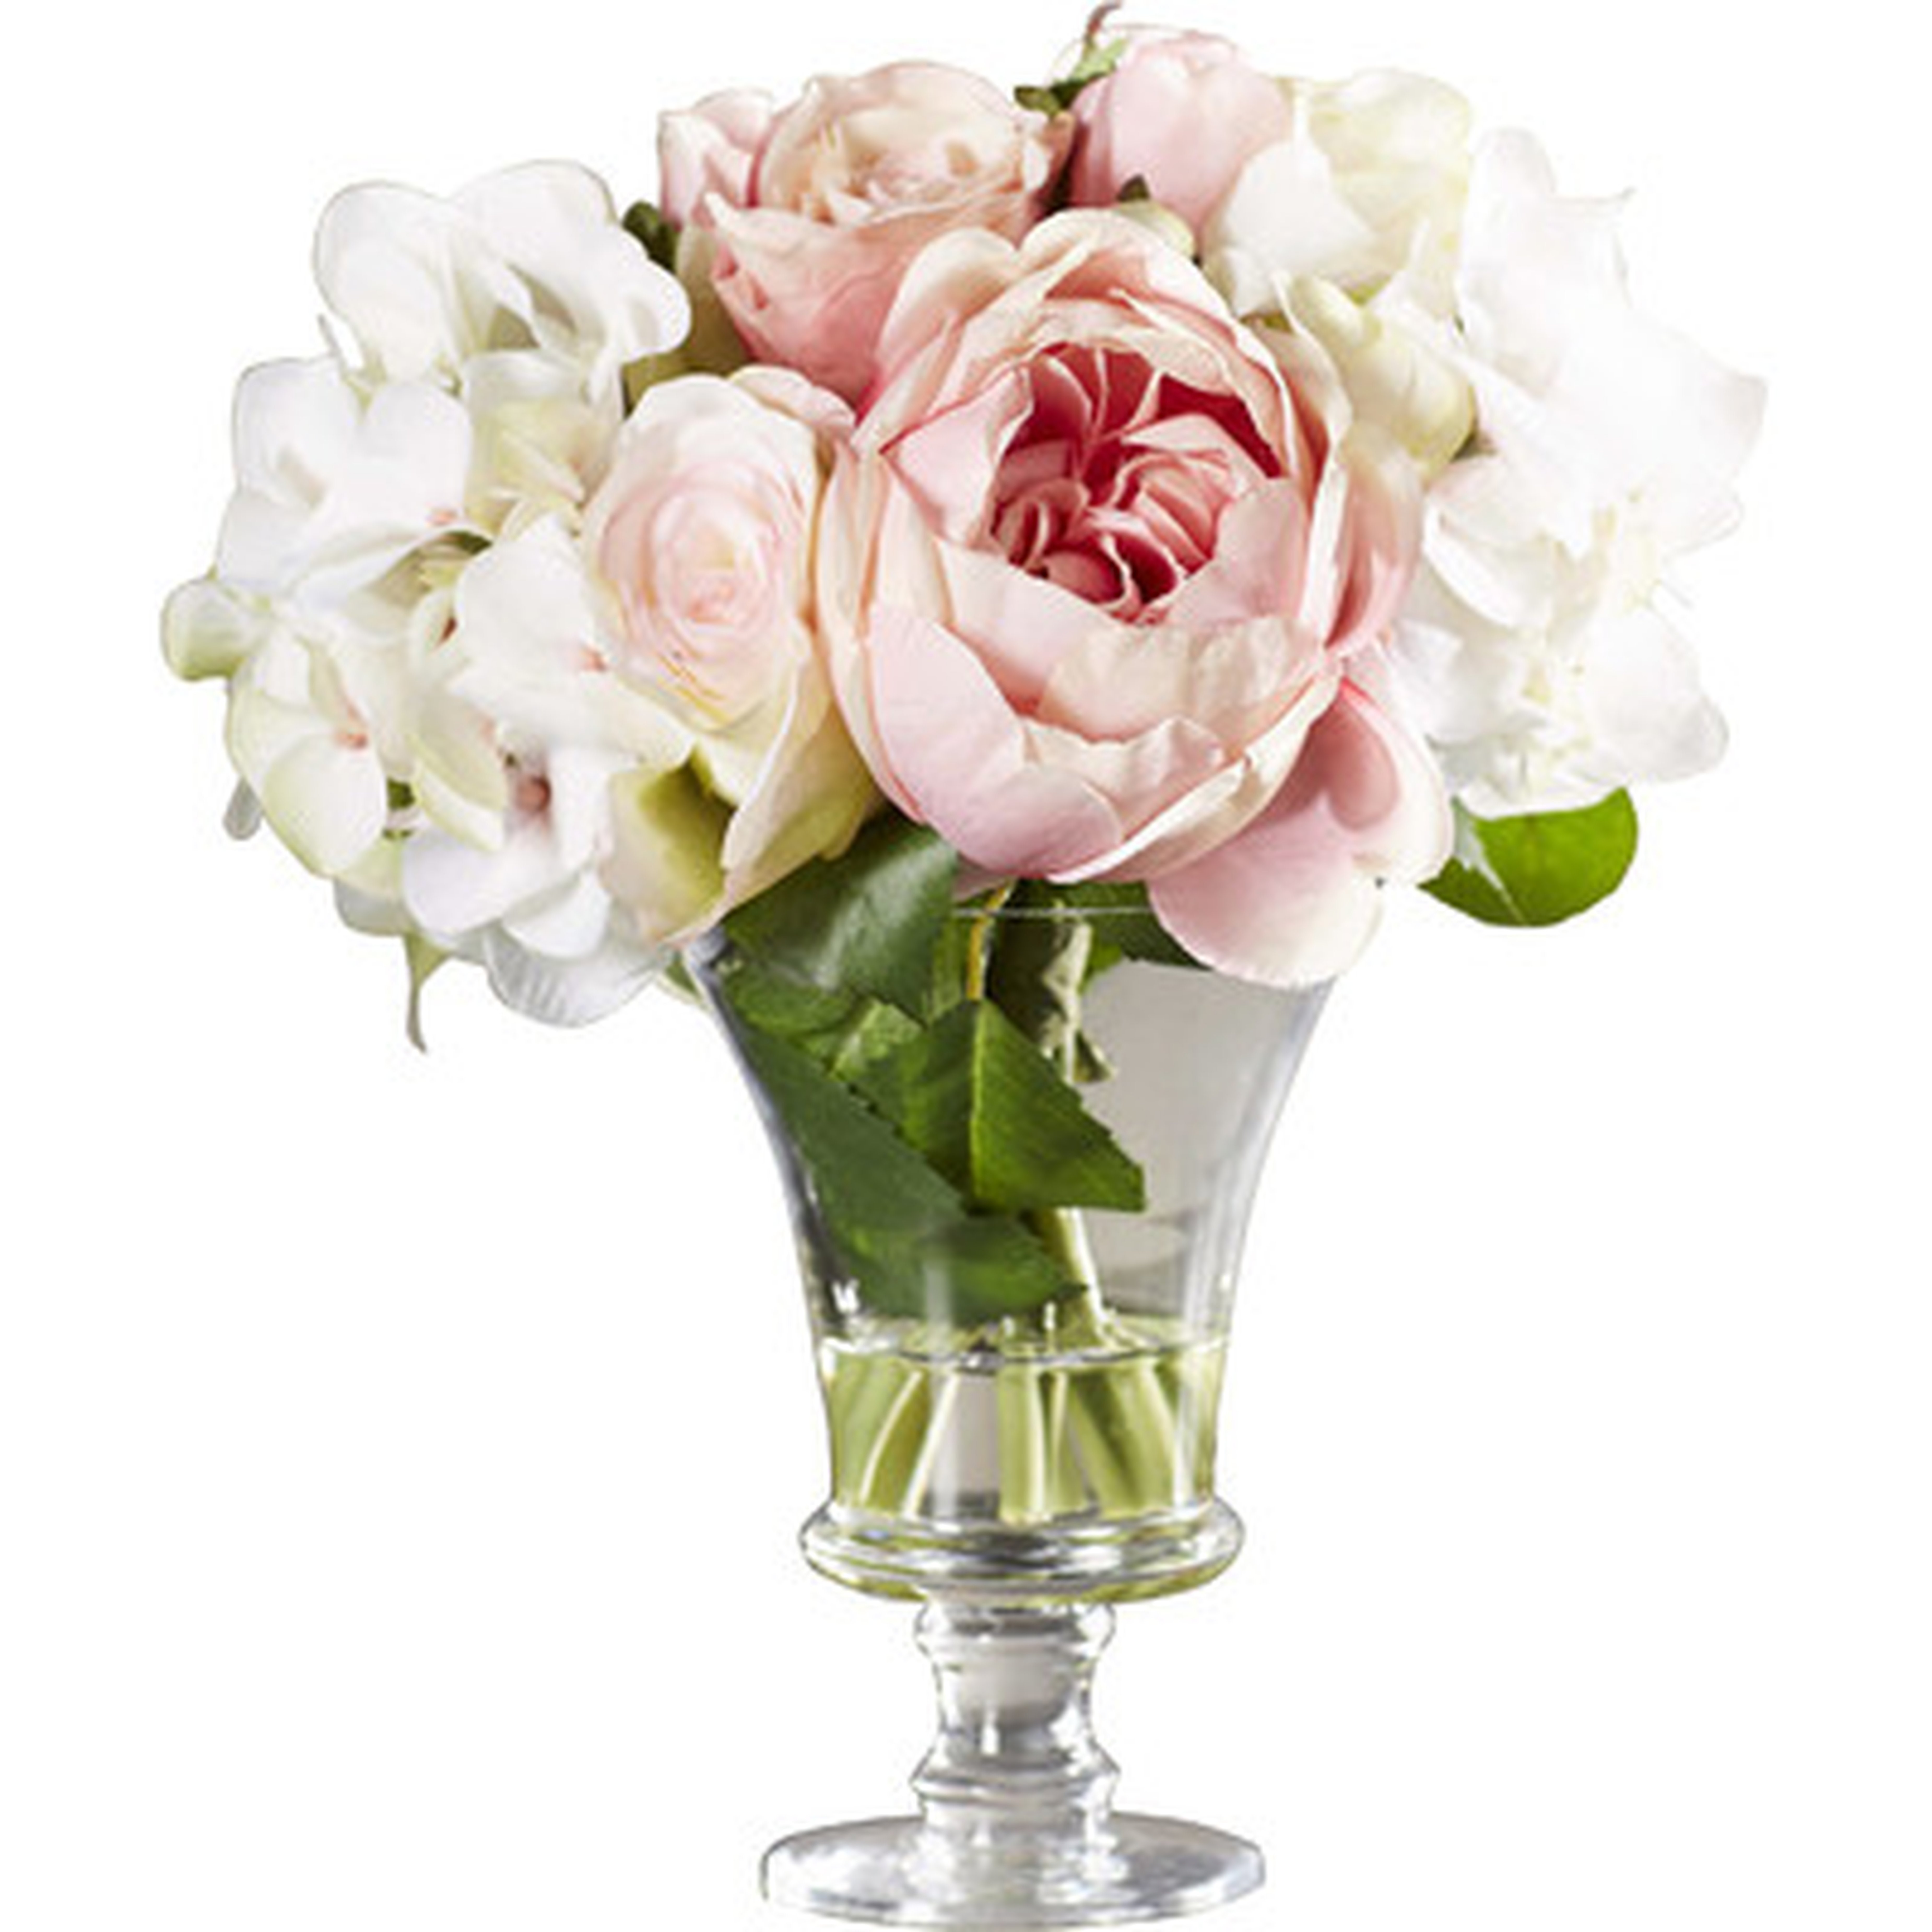 Faux Rose and Hydrangea Floral Arrangement in Pedestal Glass Vase - Birch Lane